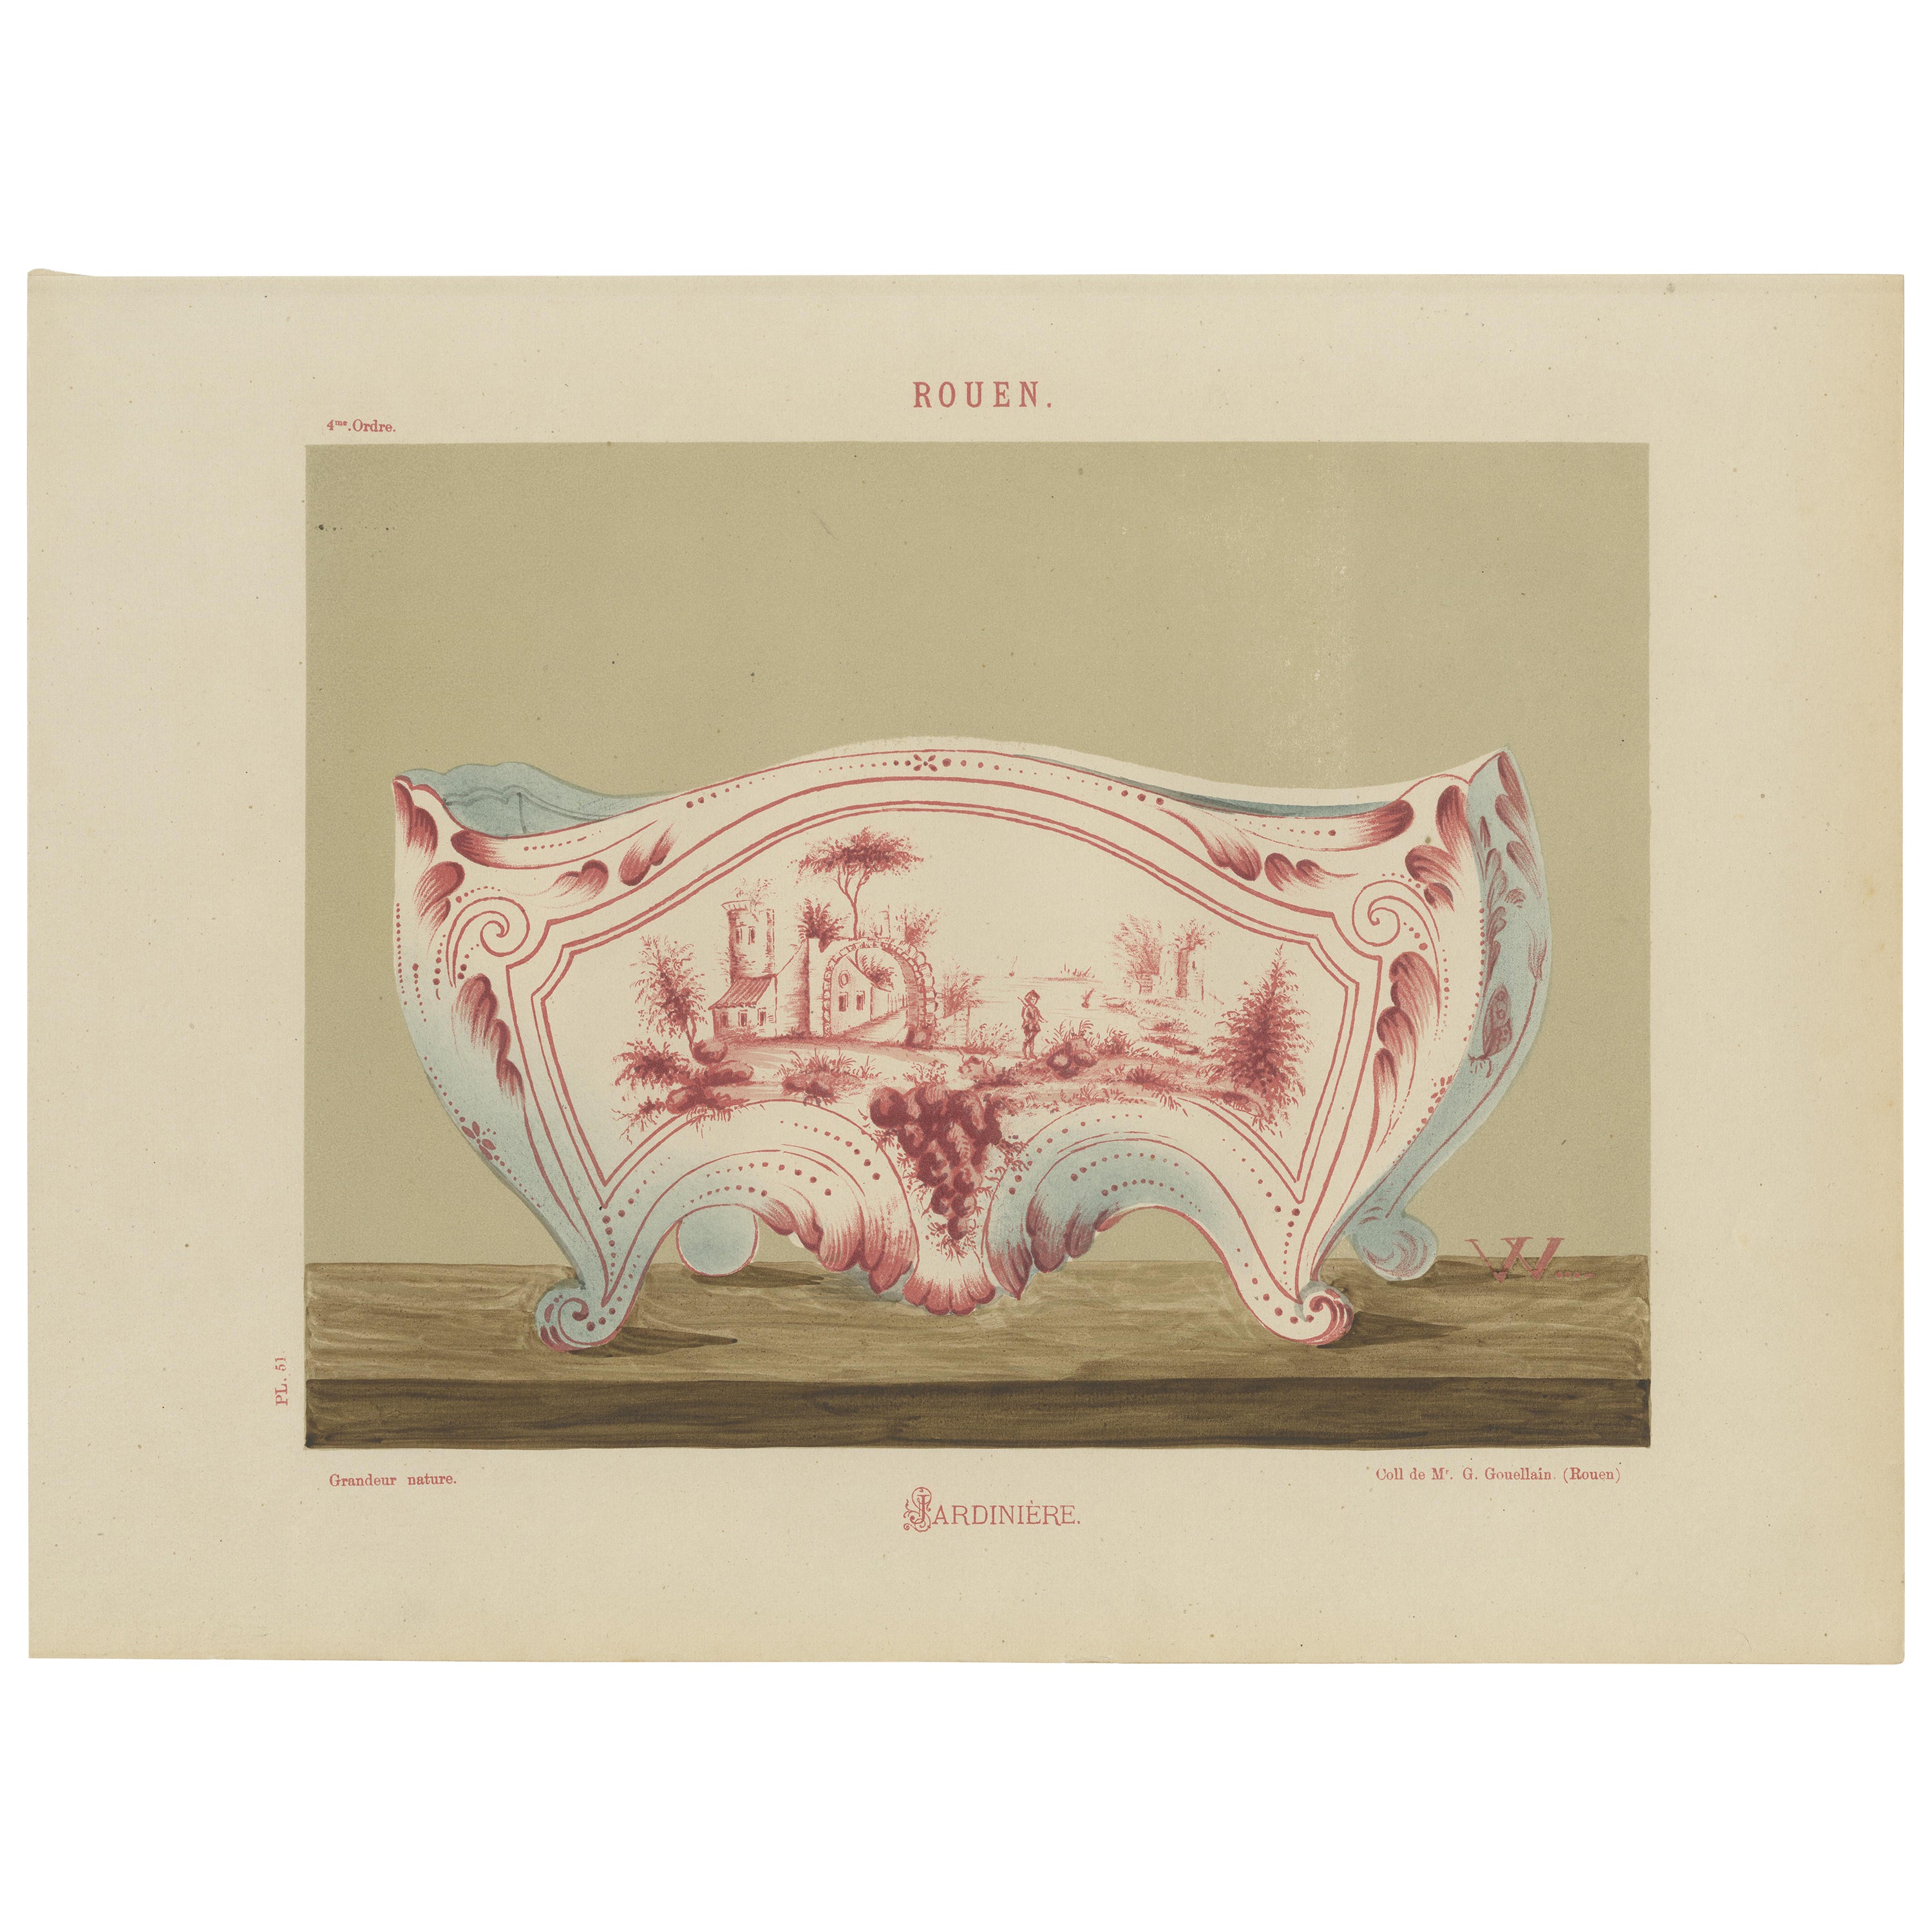 Rouen Jardinière in Ceramic: A Glimpse of Pastoral Serenity, 1874